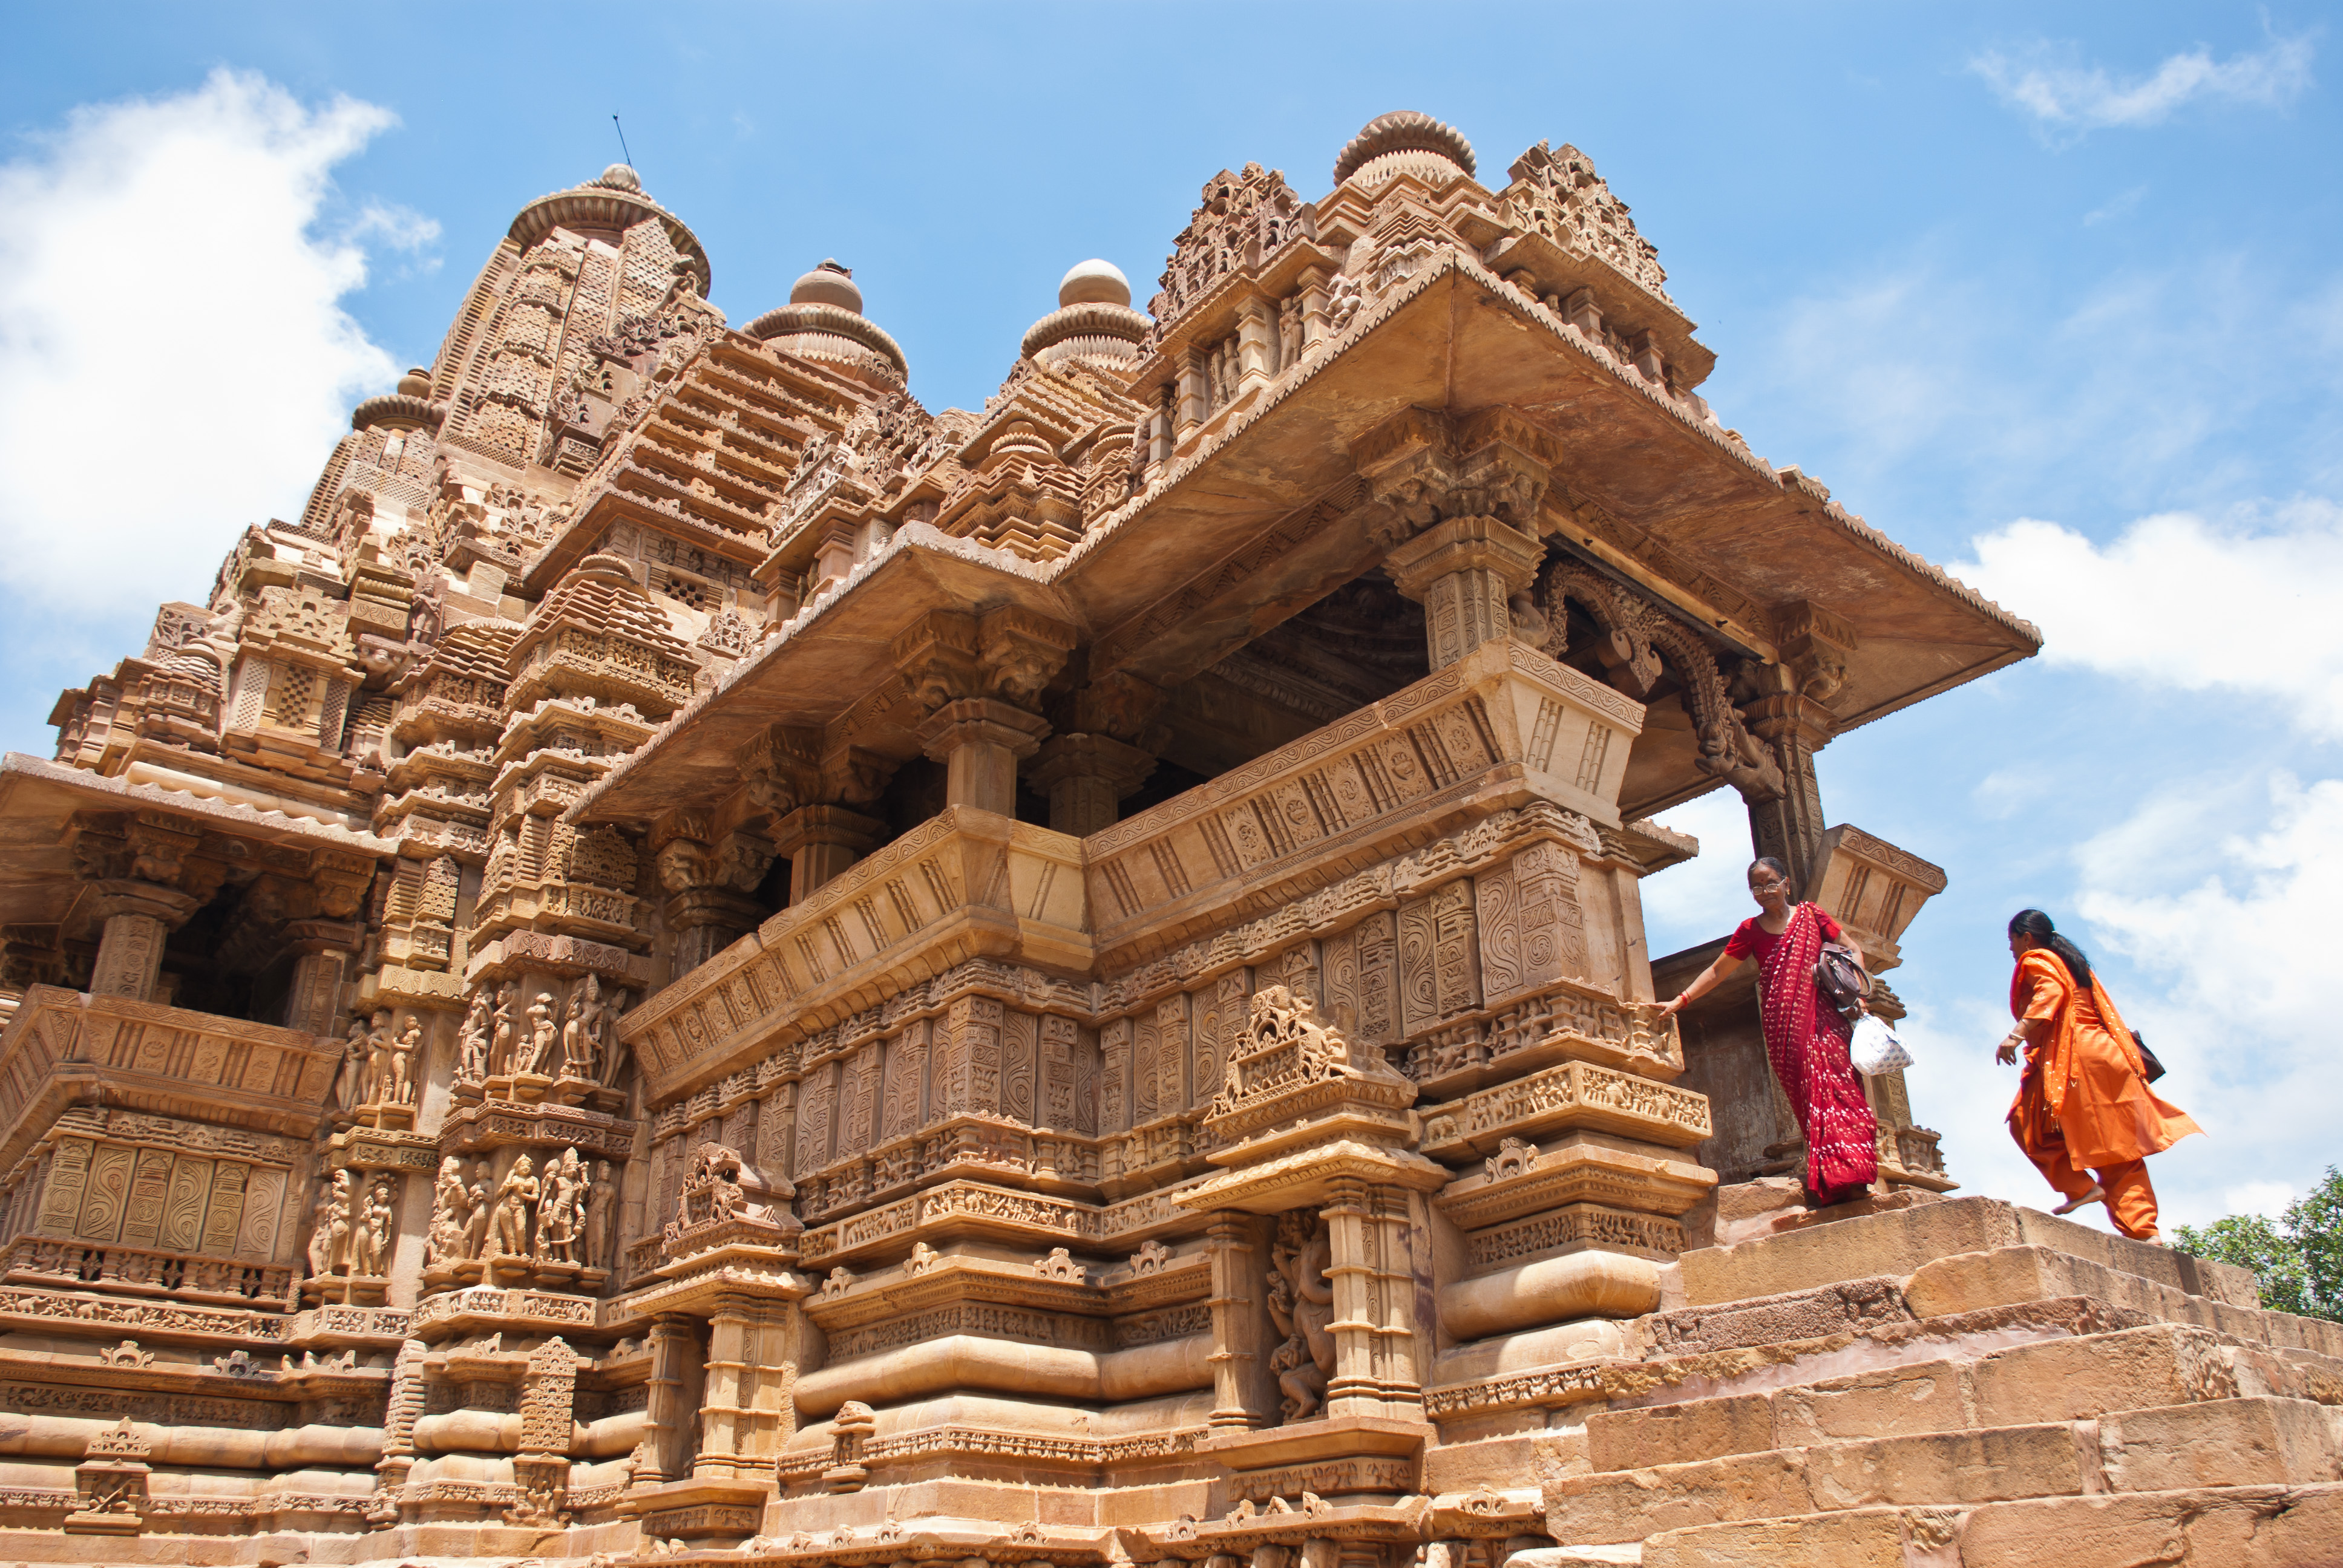 Entrance to the first Mandapa, Lakshmana Temple, Khajuraho, Chhatarpur District, Madhya Pradesh, India, dedicated 954 (photo: <a href="https://commons.wikimedia.org/wiki/File:Lakshmana_Temple_17.jpg" target="_blank">Antoine Taveneaux</a>, CC BY-SA 3.0)